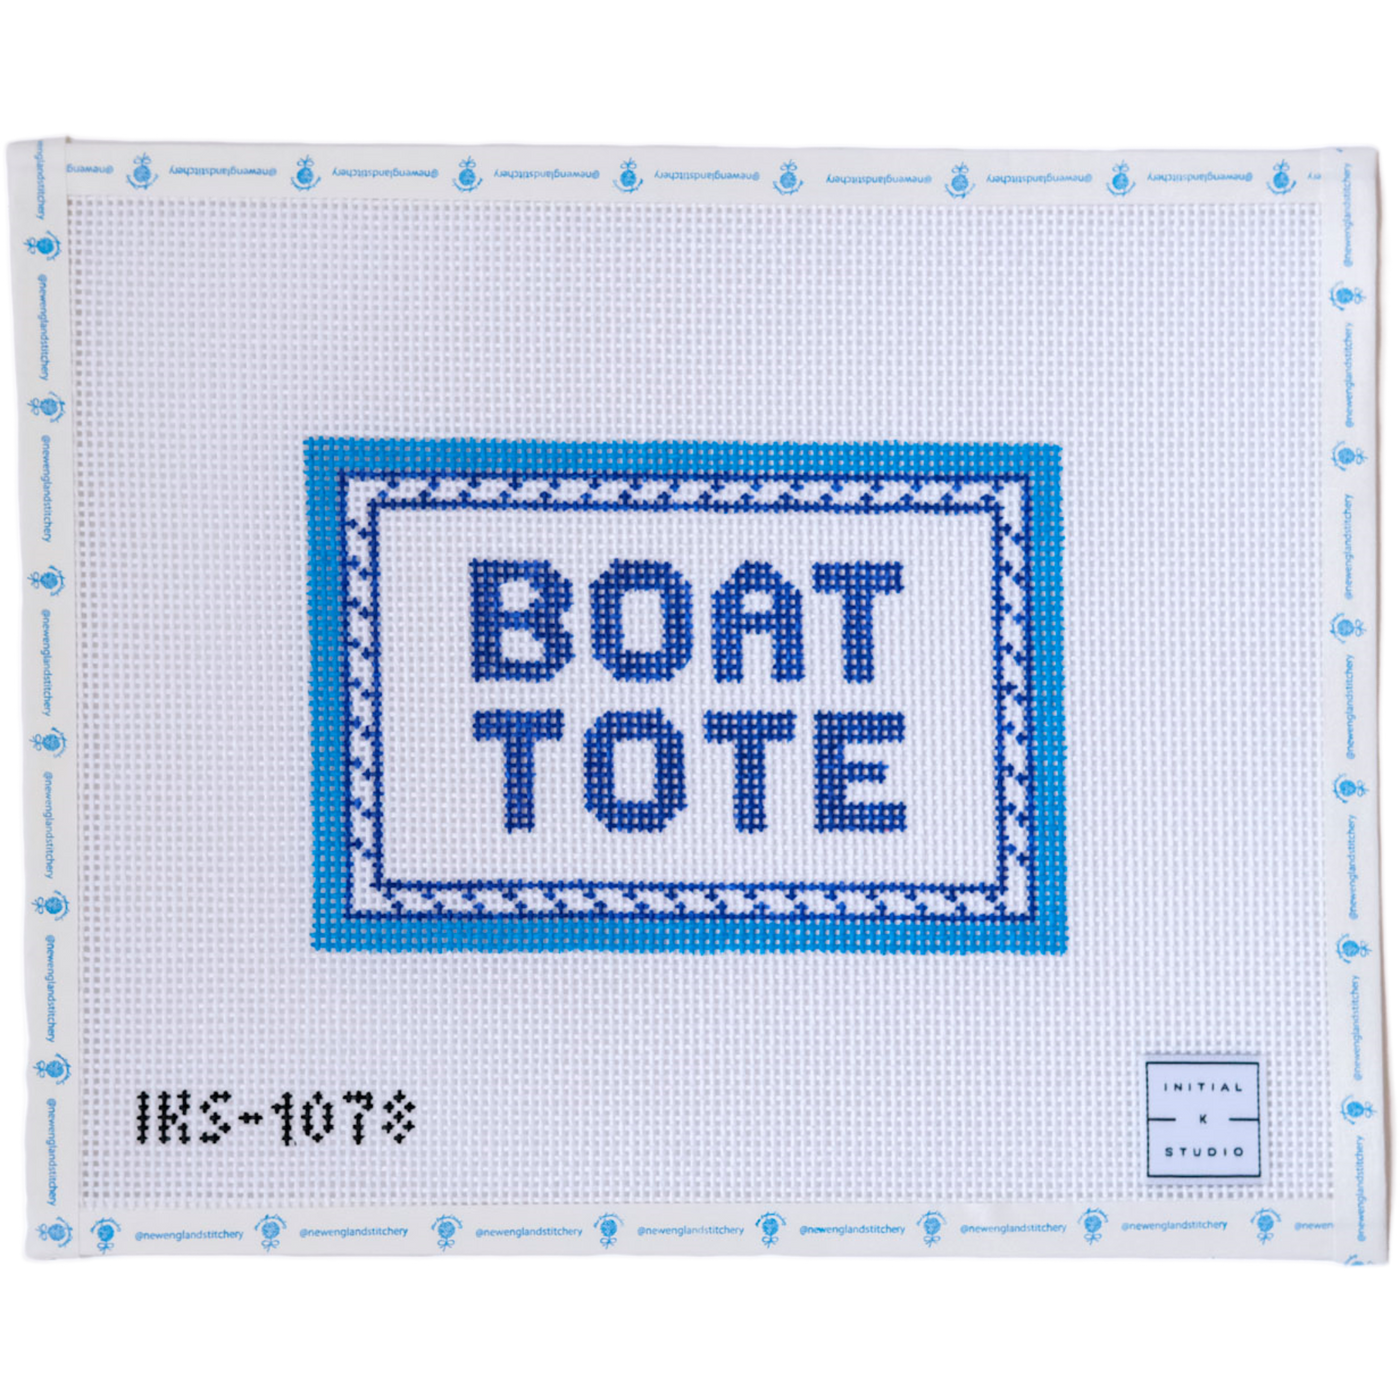 Boat Tote